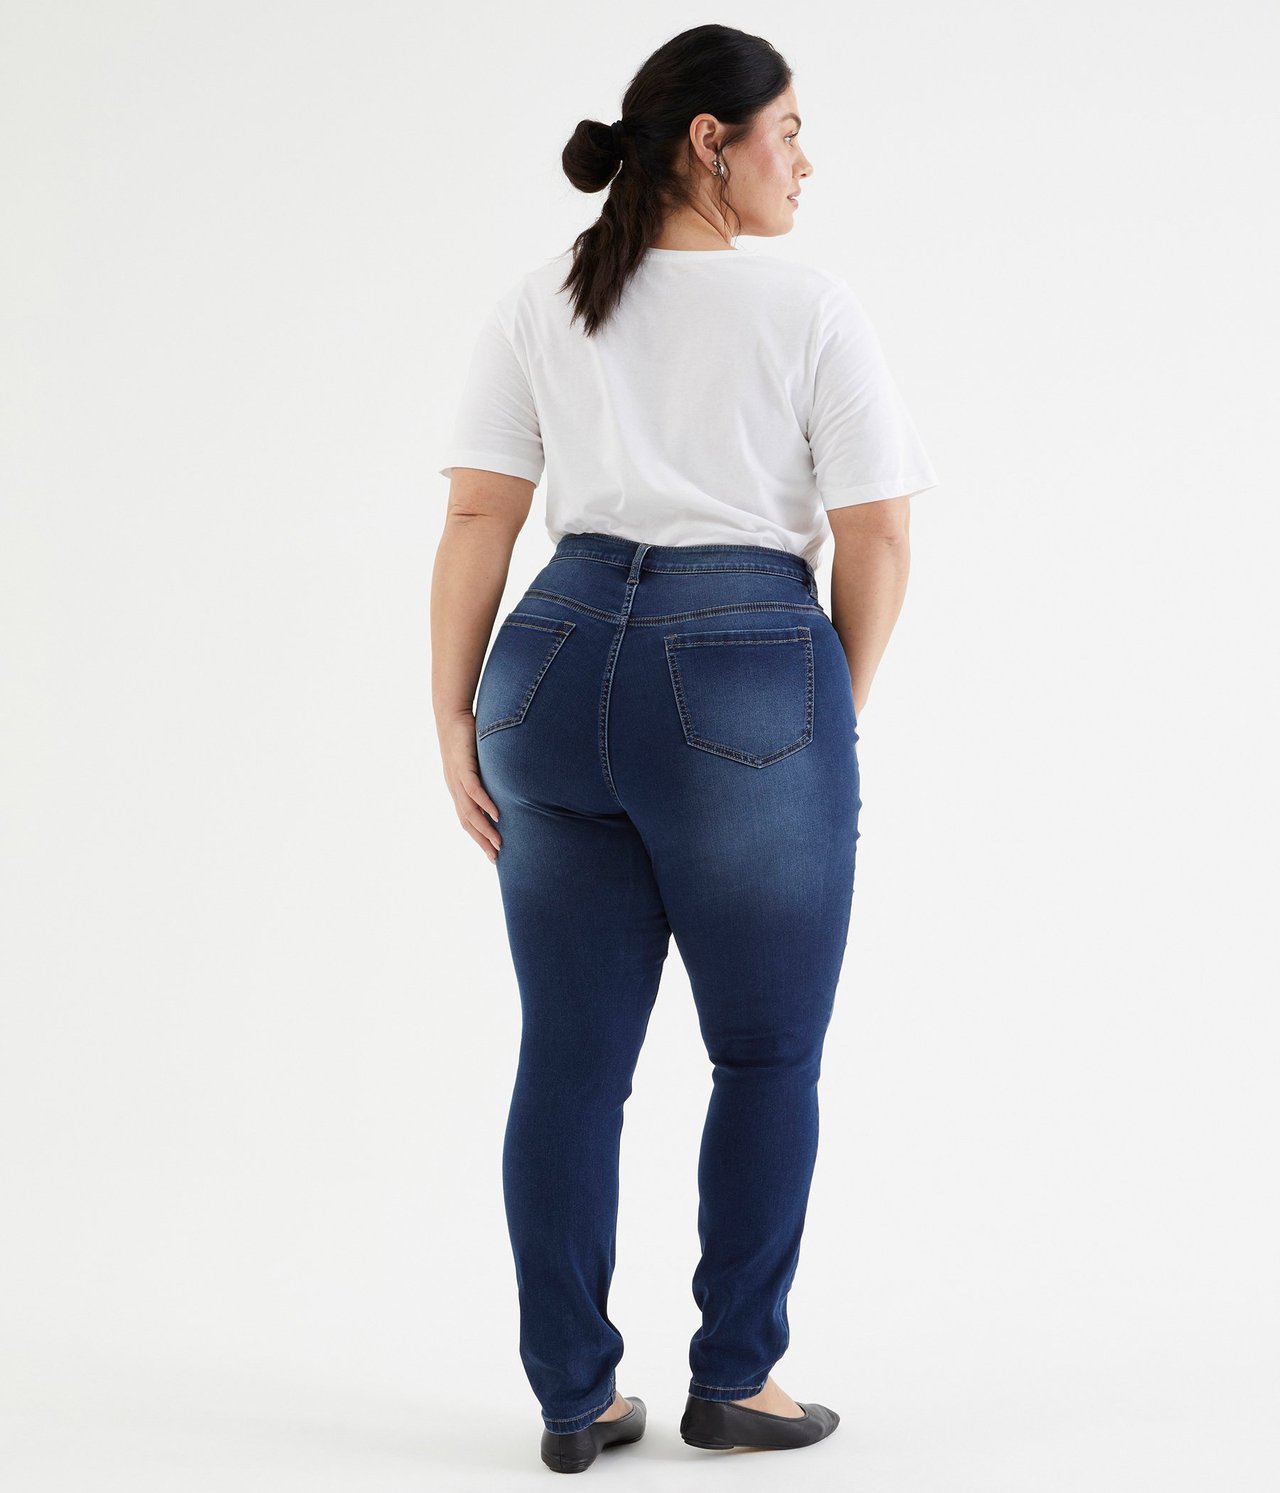 Ebba slim jeans extra long leg Mörk denim - null - 0